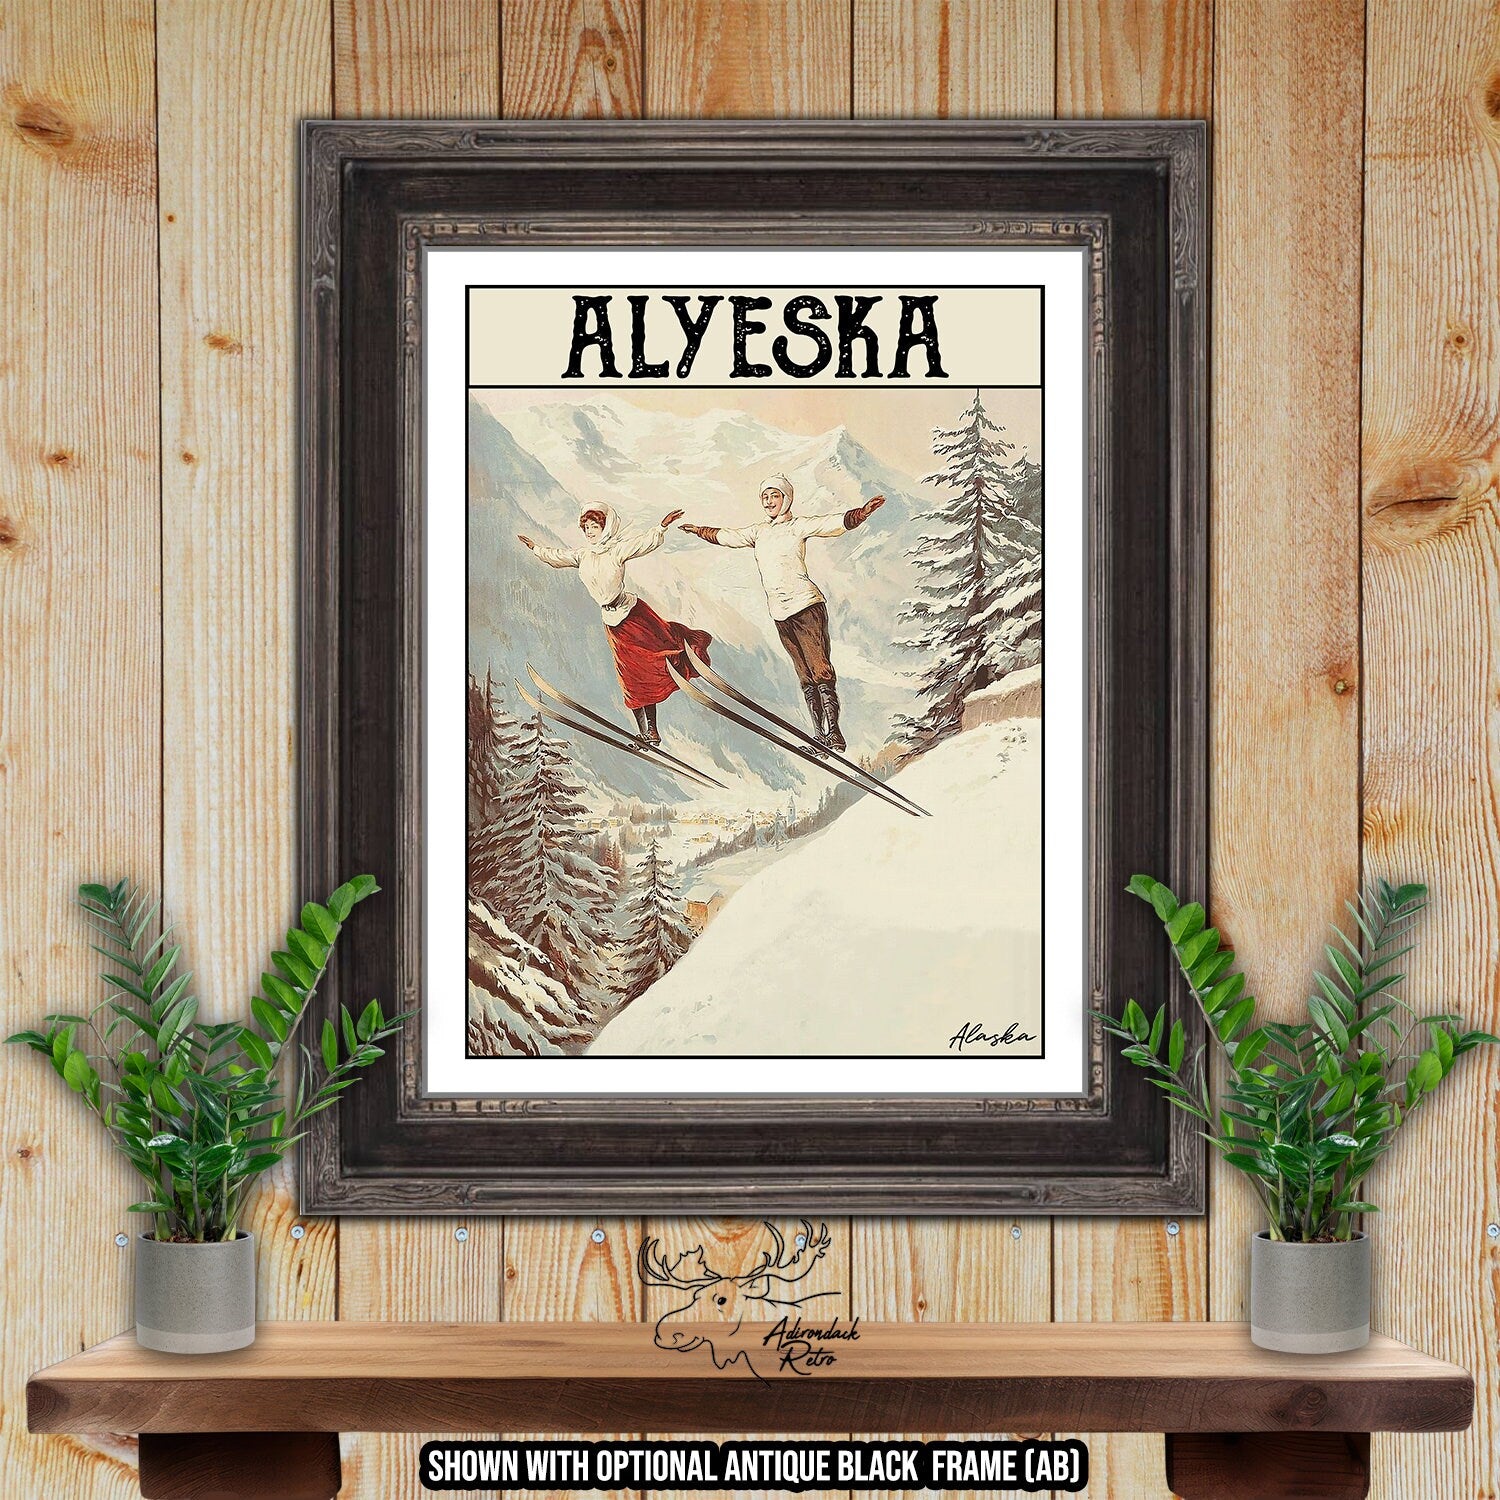 Alyeska Alaska Retro Ski Resort Print at Adirondack Retro